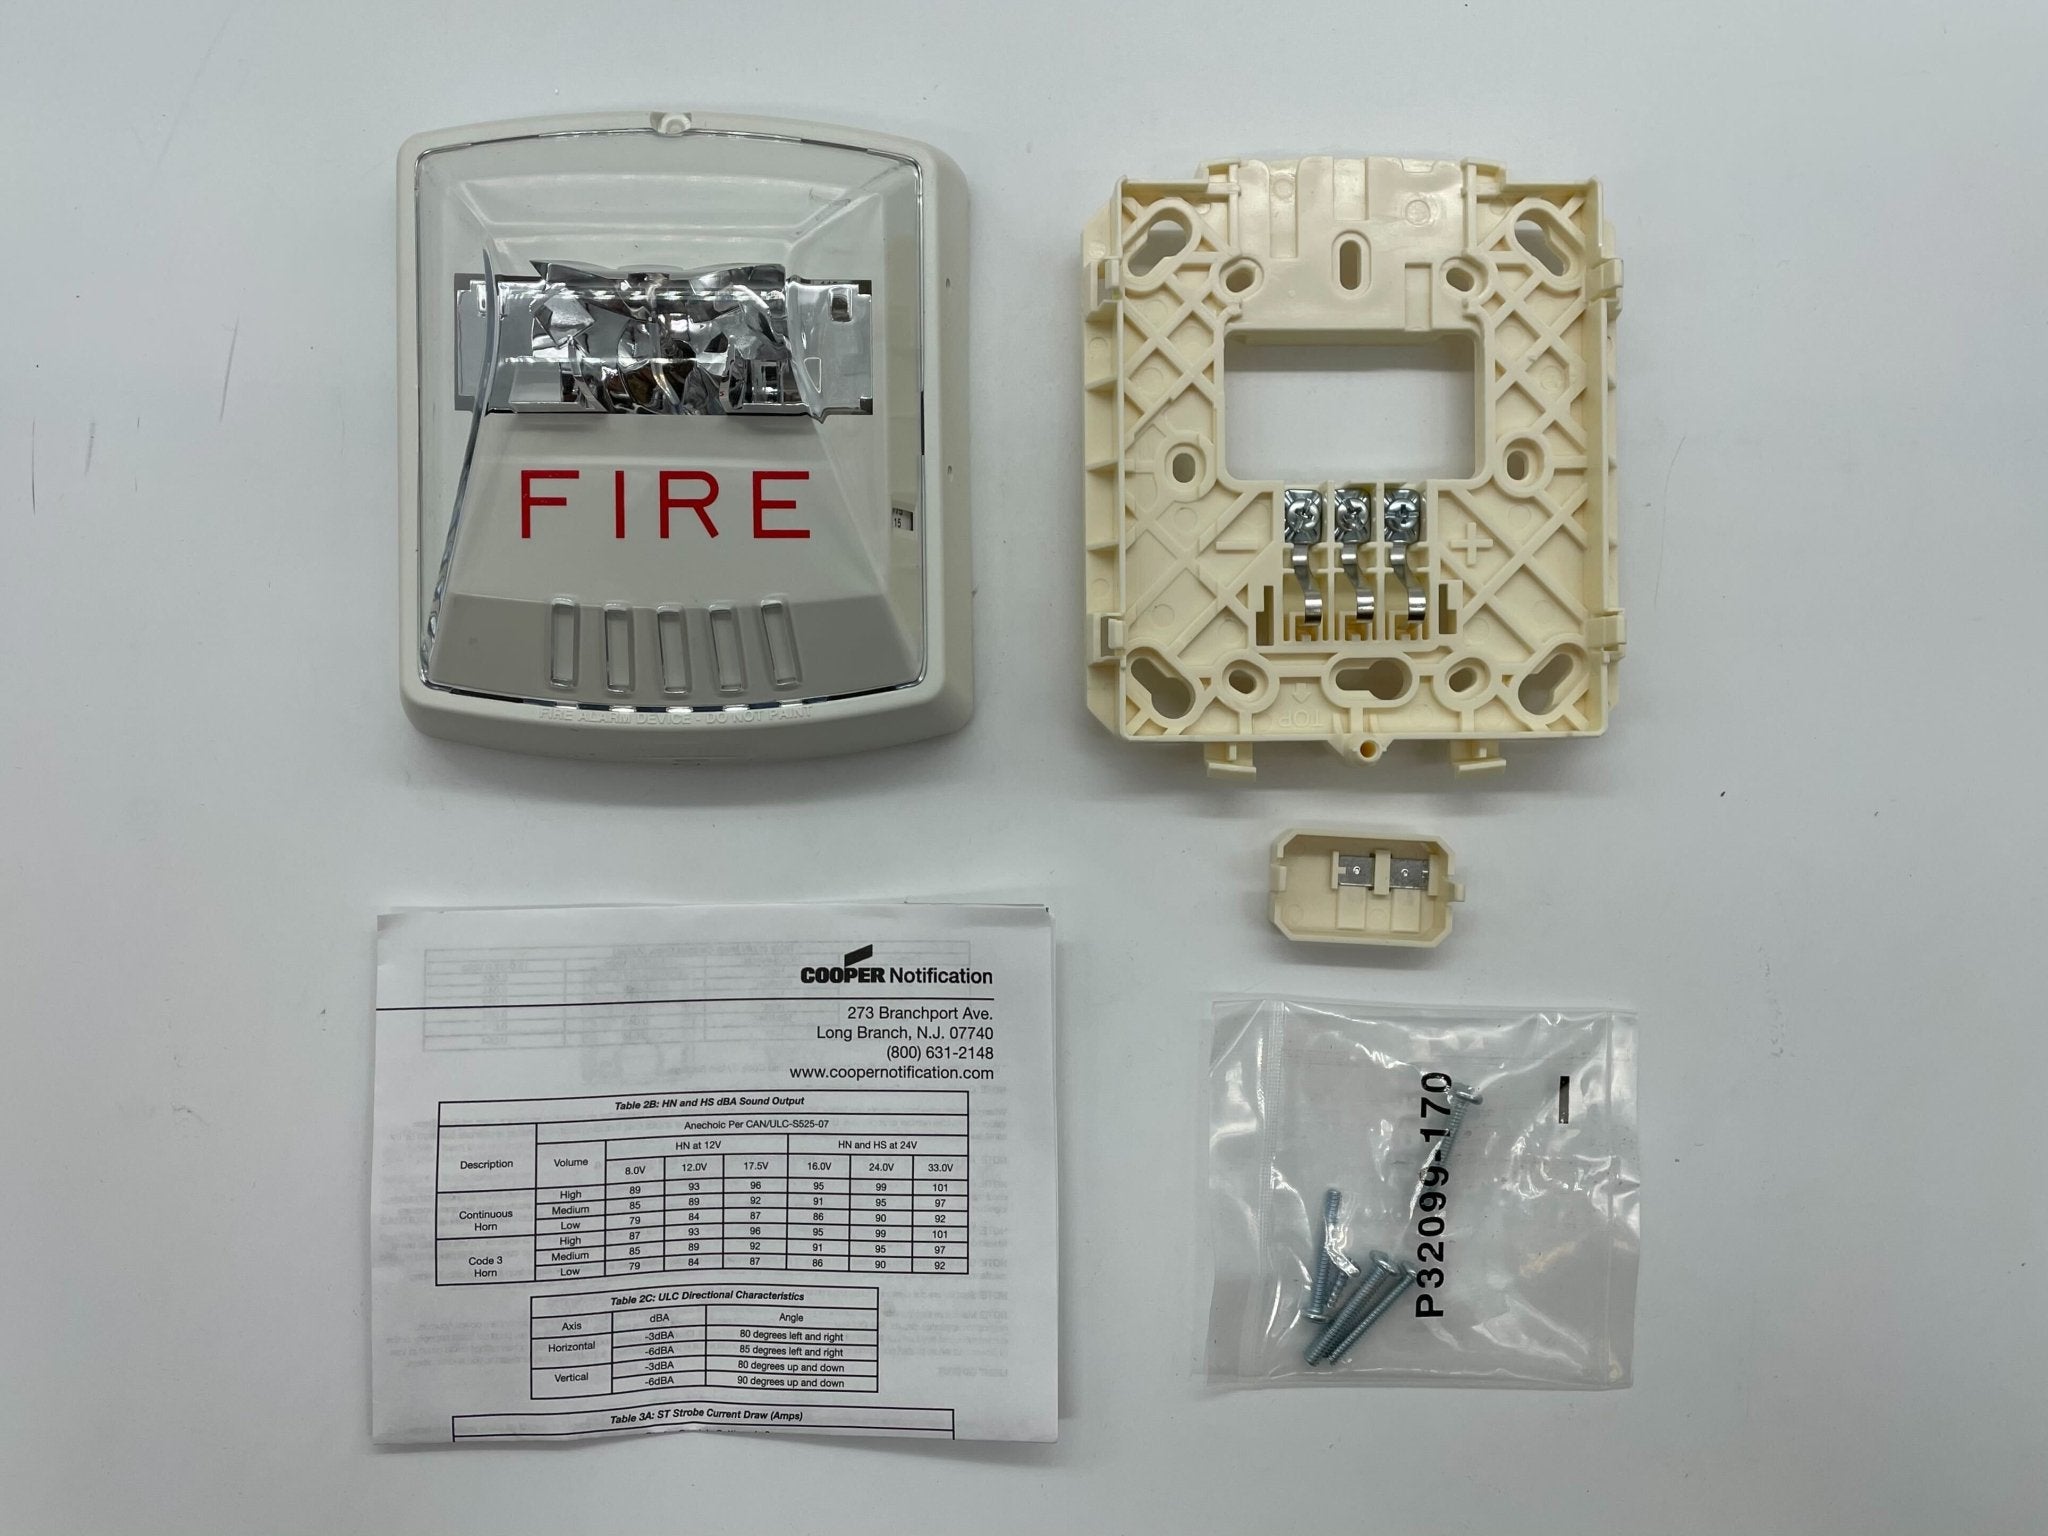 Wheelock STW - The Fire Alarm Supplier